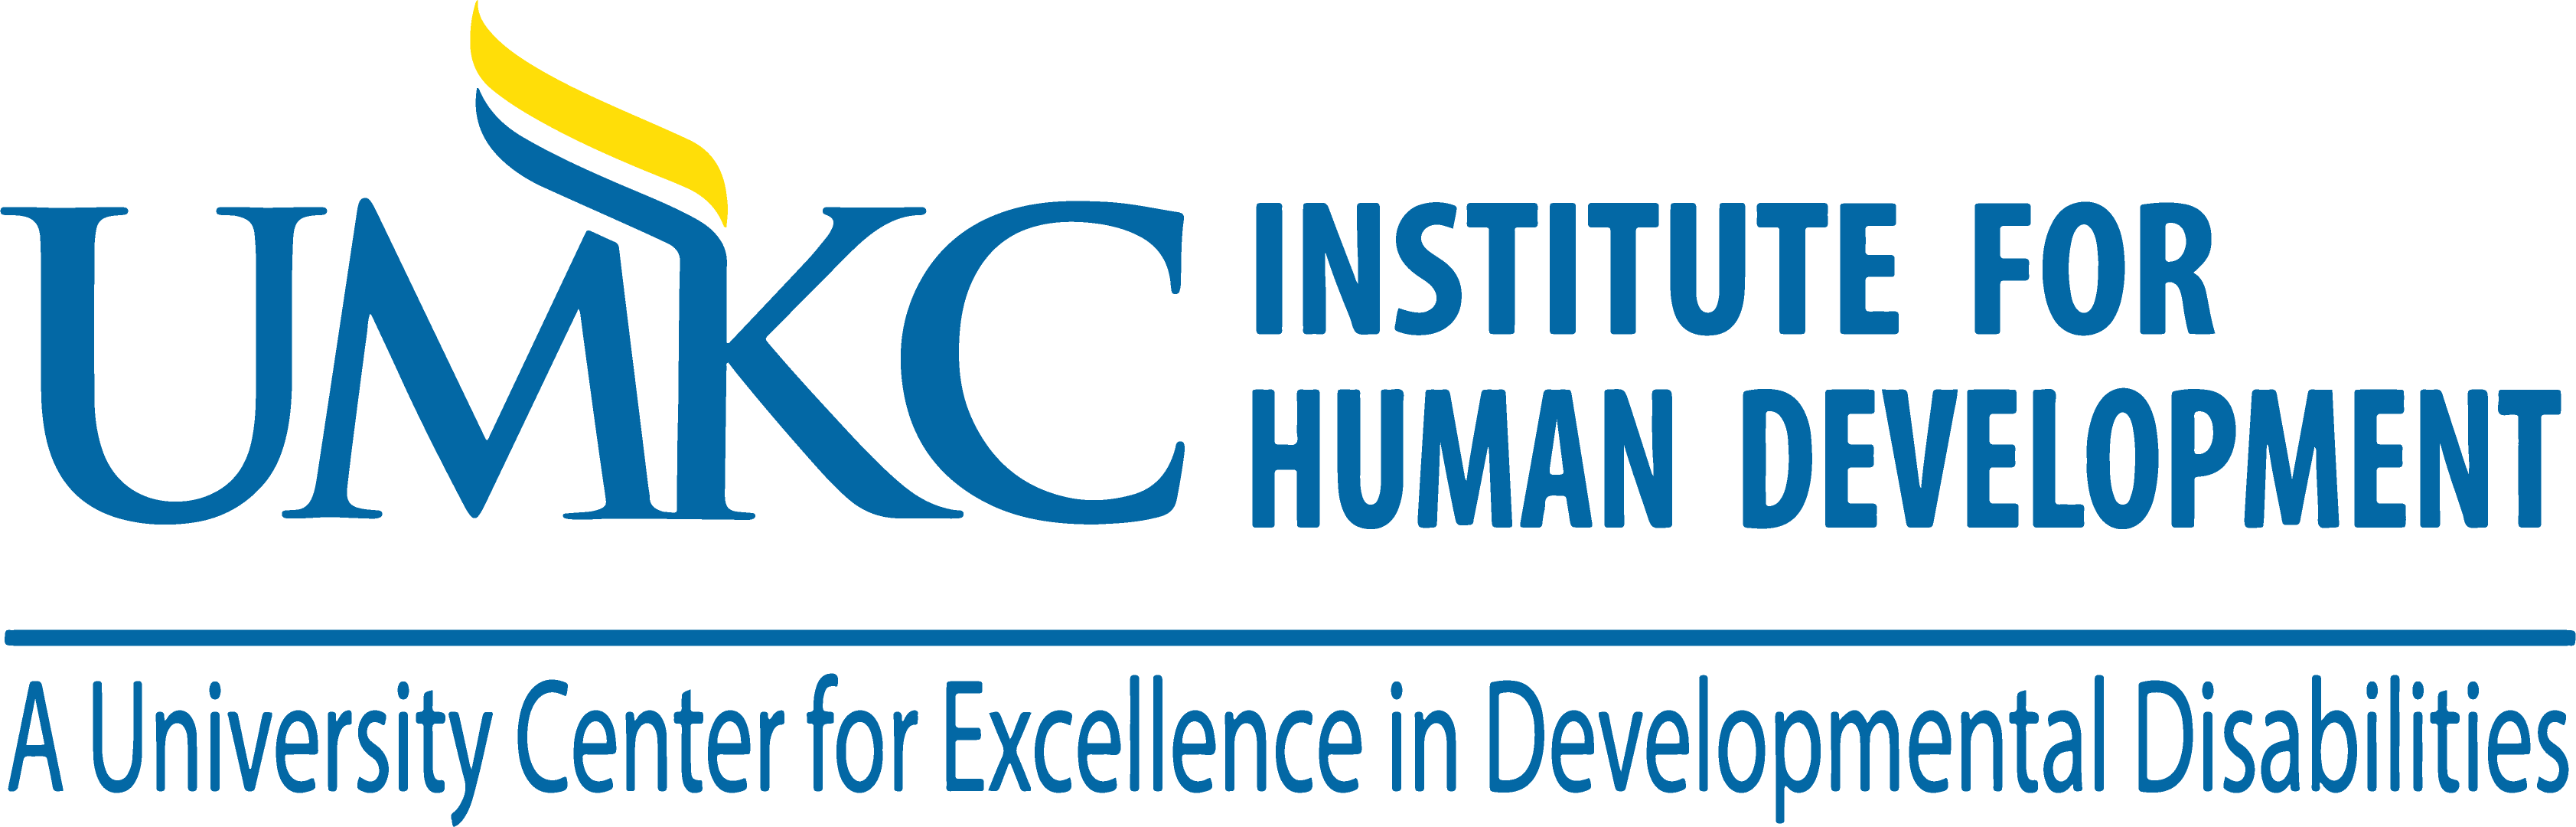 Logo: UMKC Institute for Human Development, a University Center for Excellence in Developmental Disabilities.